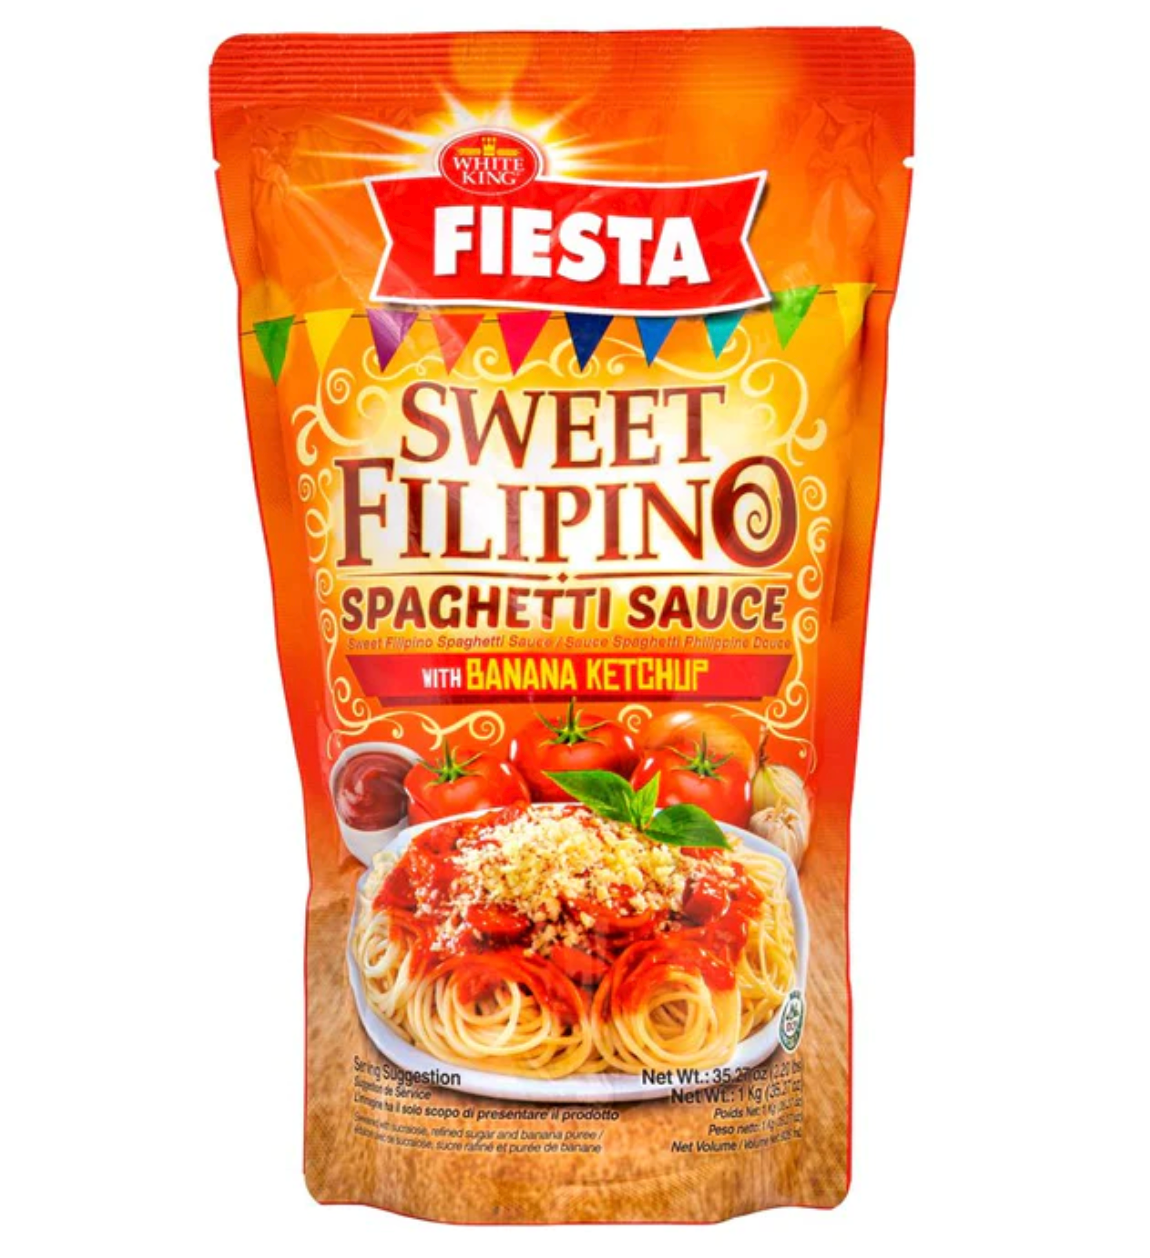 White King Fiesta Sweet Filipino Spaghetti Sauce 1kg